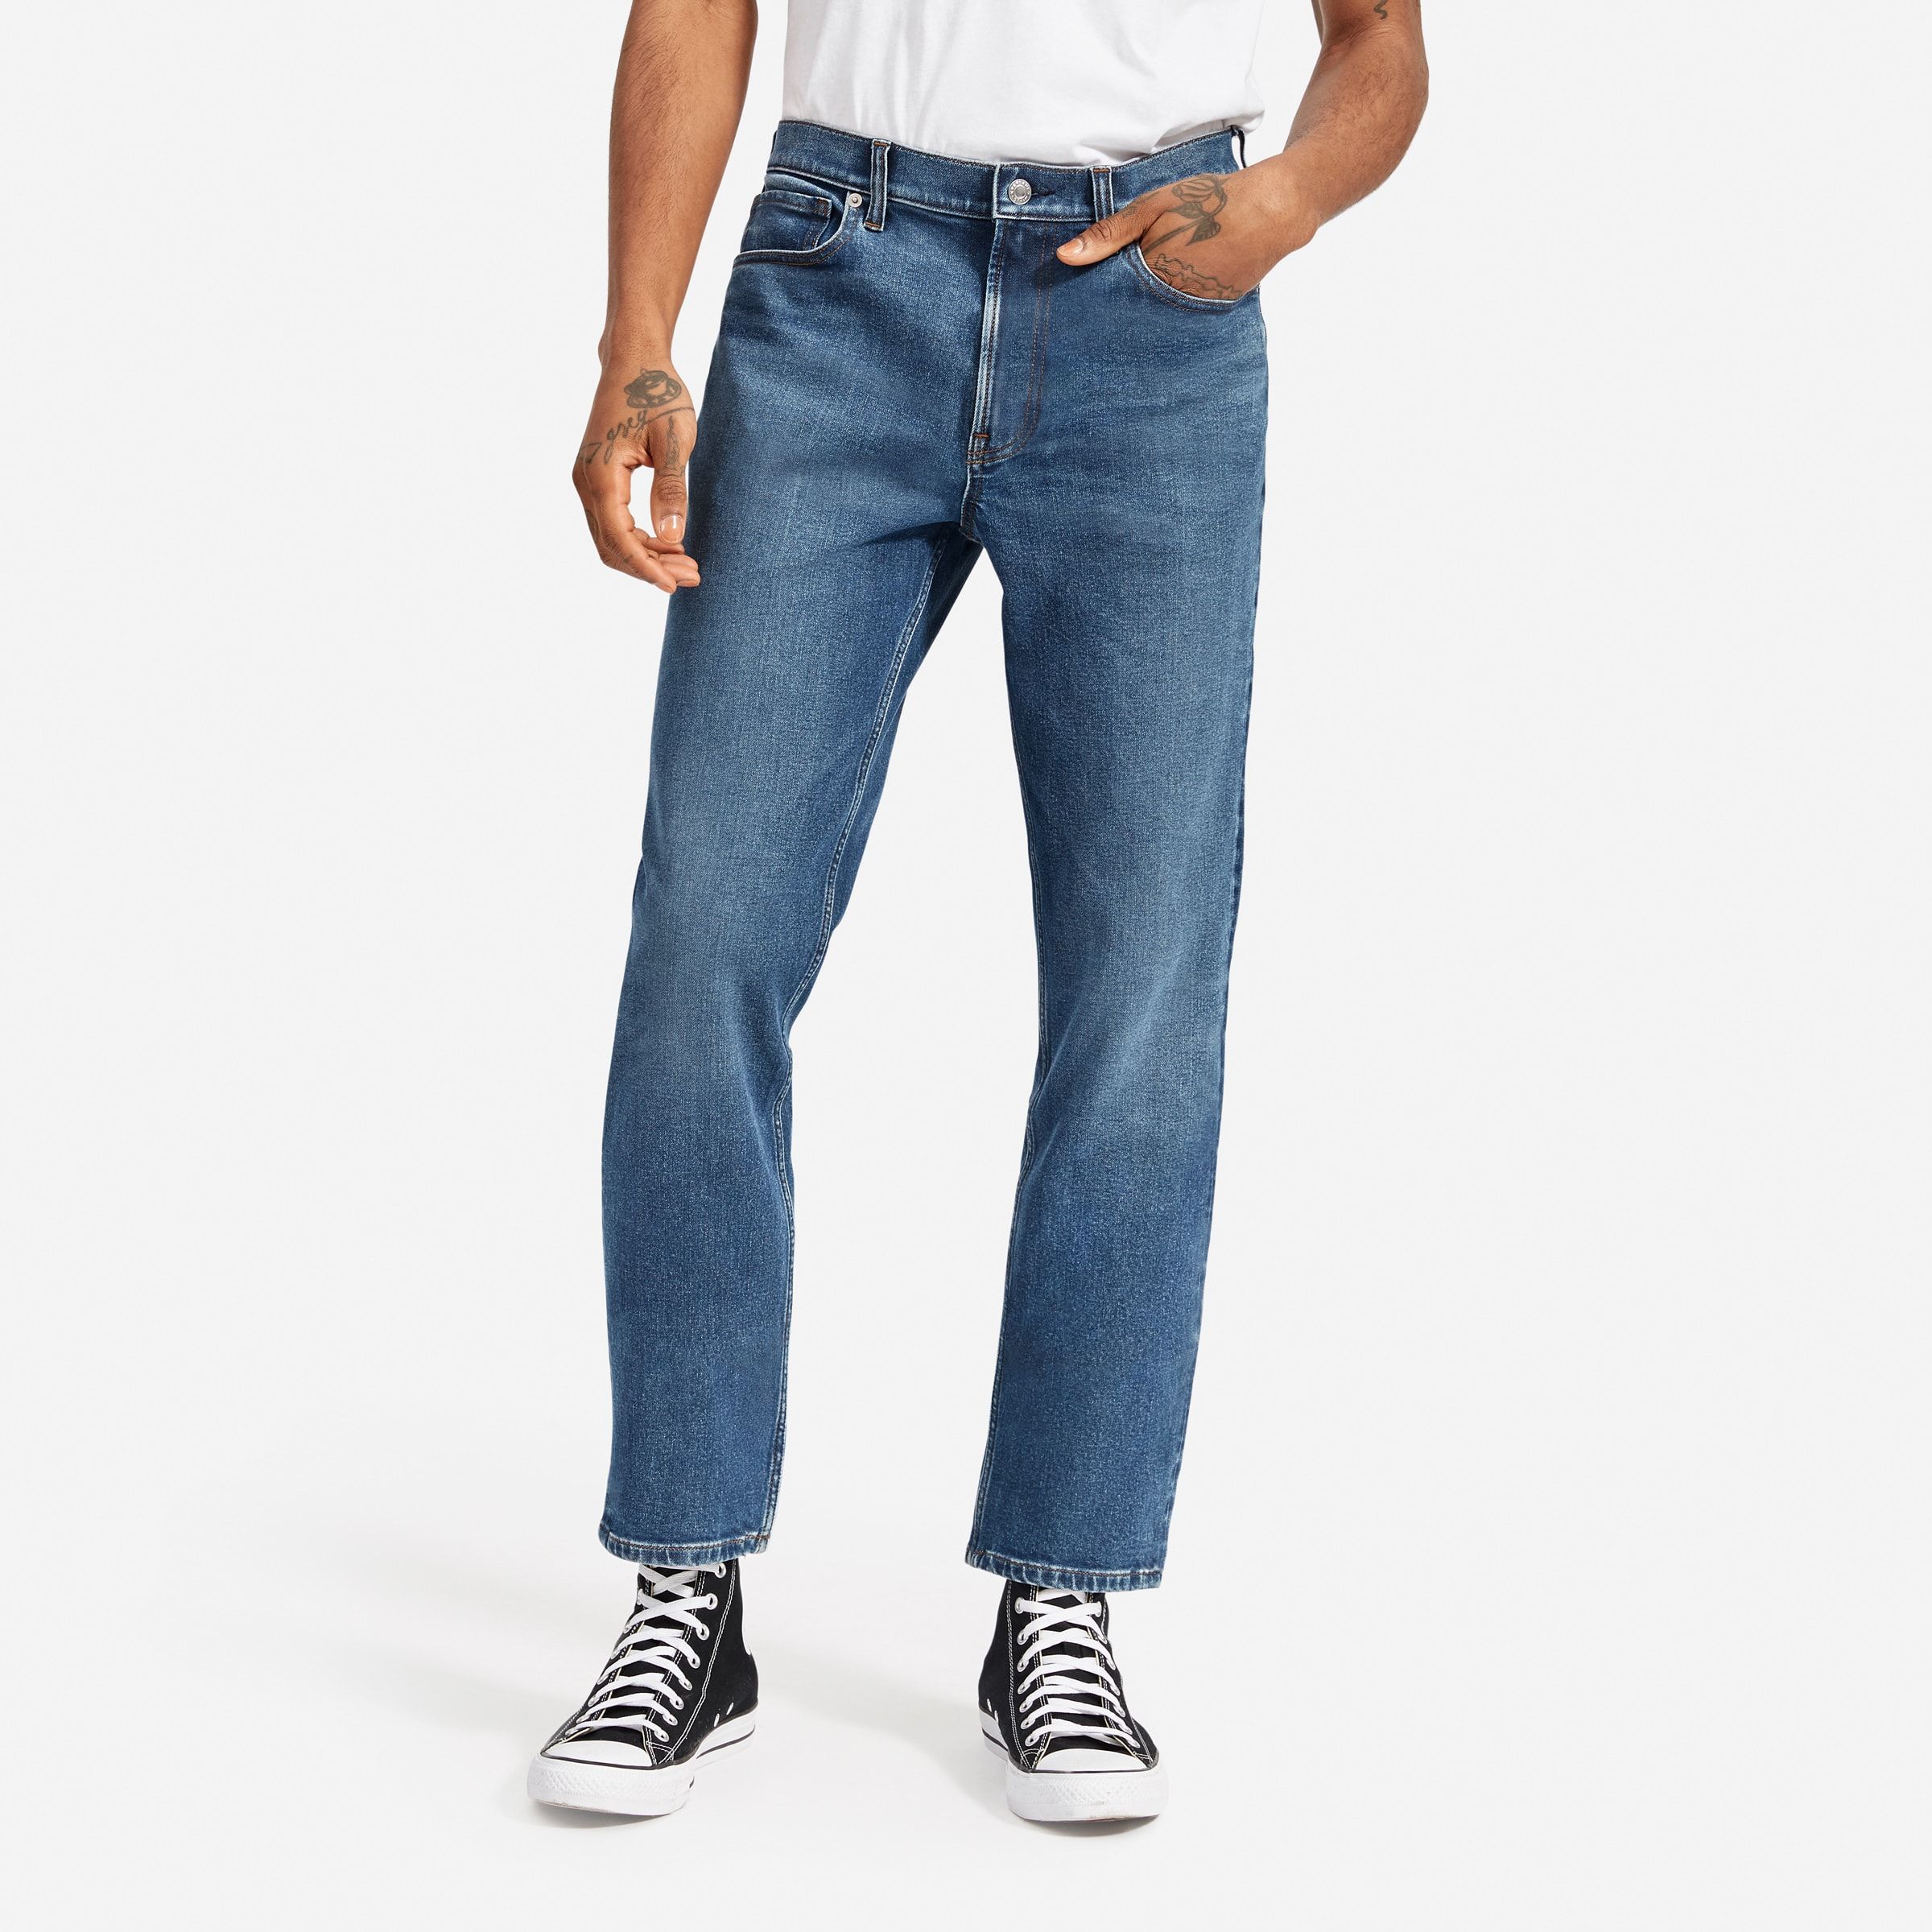 27 Best Jeans For Men To Wear In 21 Best Denim Brands For Guys